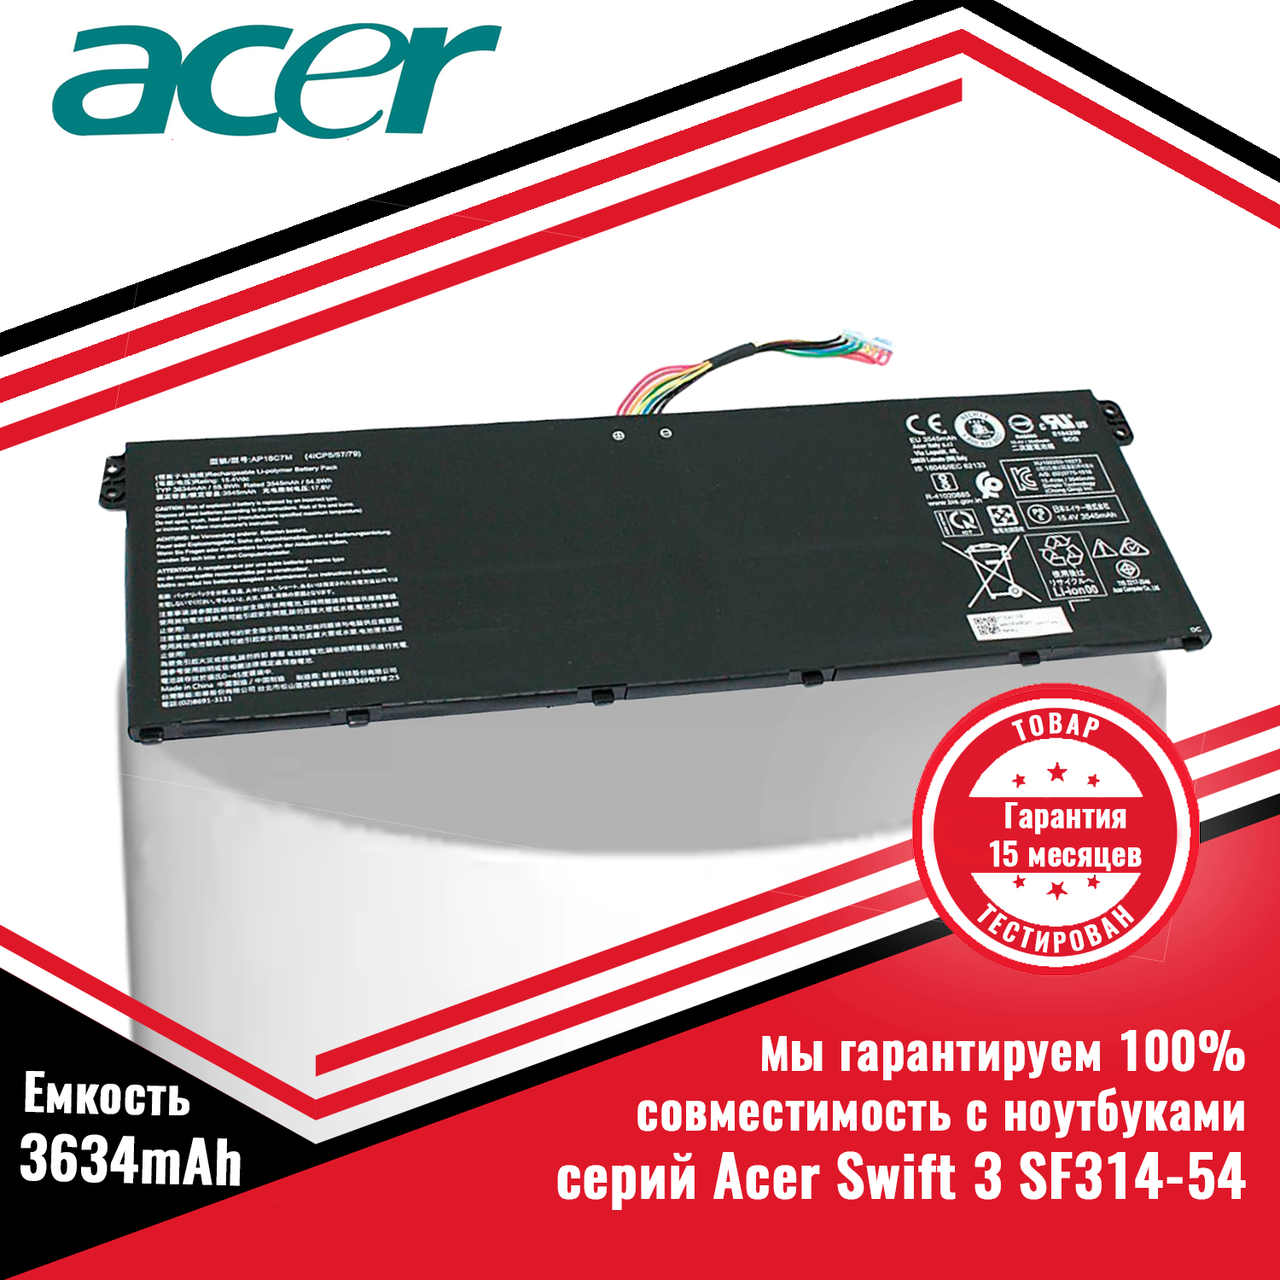 Оригинальный аккумулятор (батарея) для ноутбука Acer Swift 3 SF314-54 (AP18C7M) 15.4V 3634mAh/55.9Wh